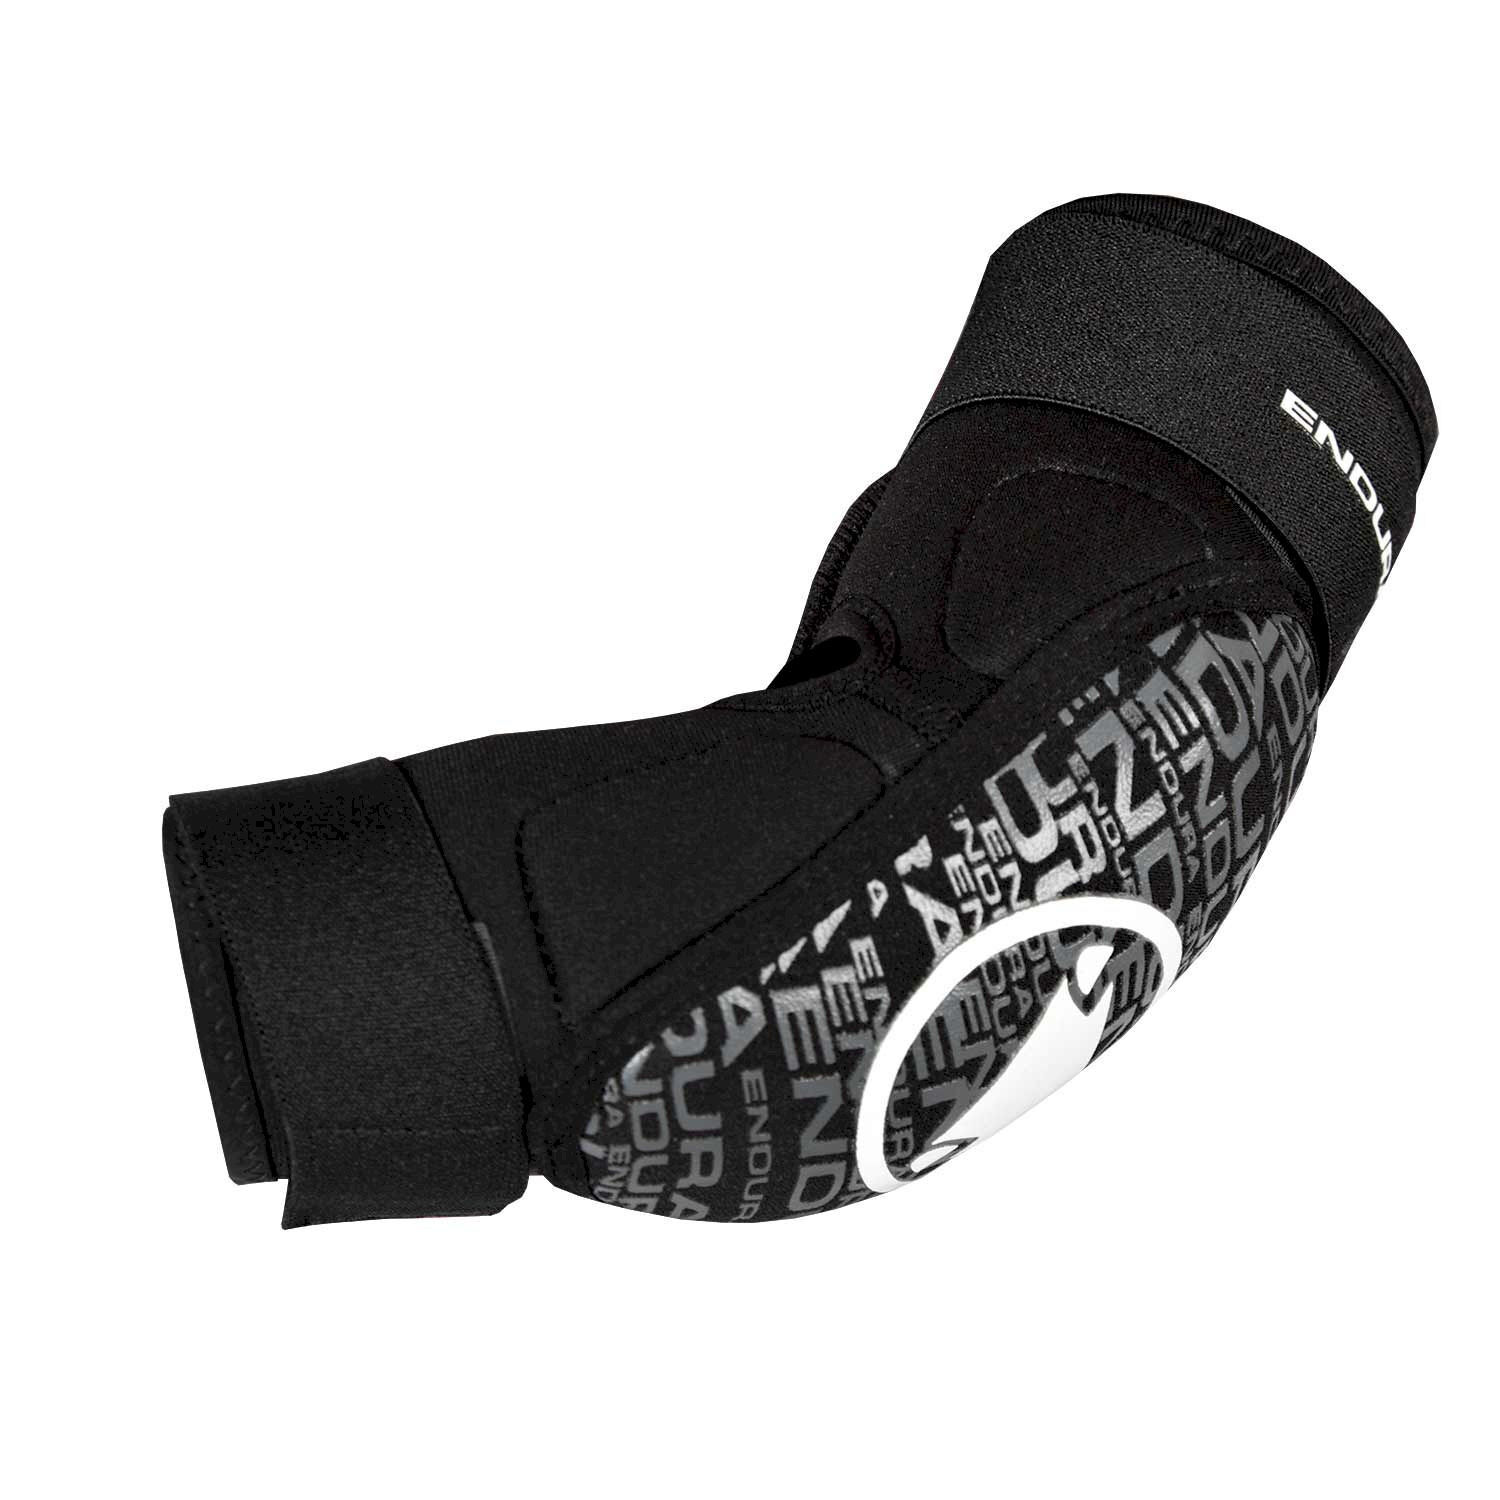 Endura SingleTrack Youth Elbow Pads - MTB Elbow pads - Kids